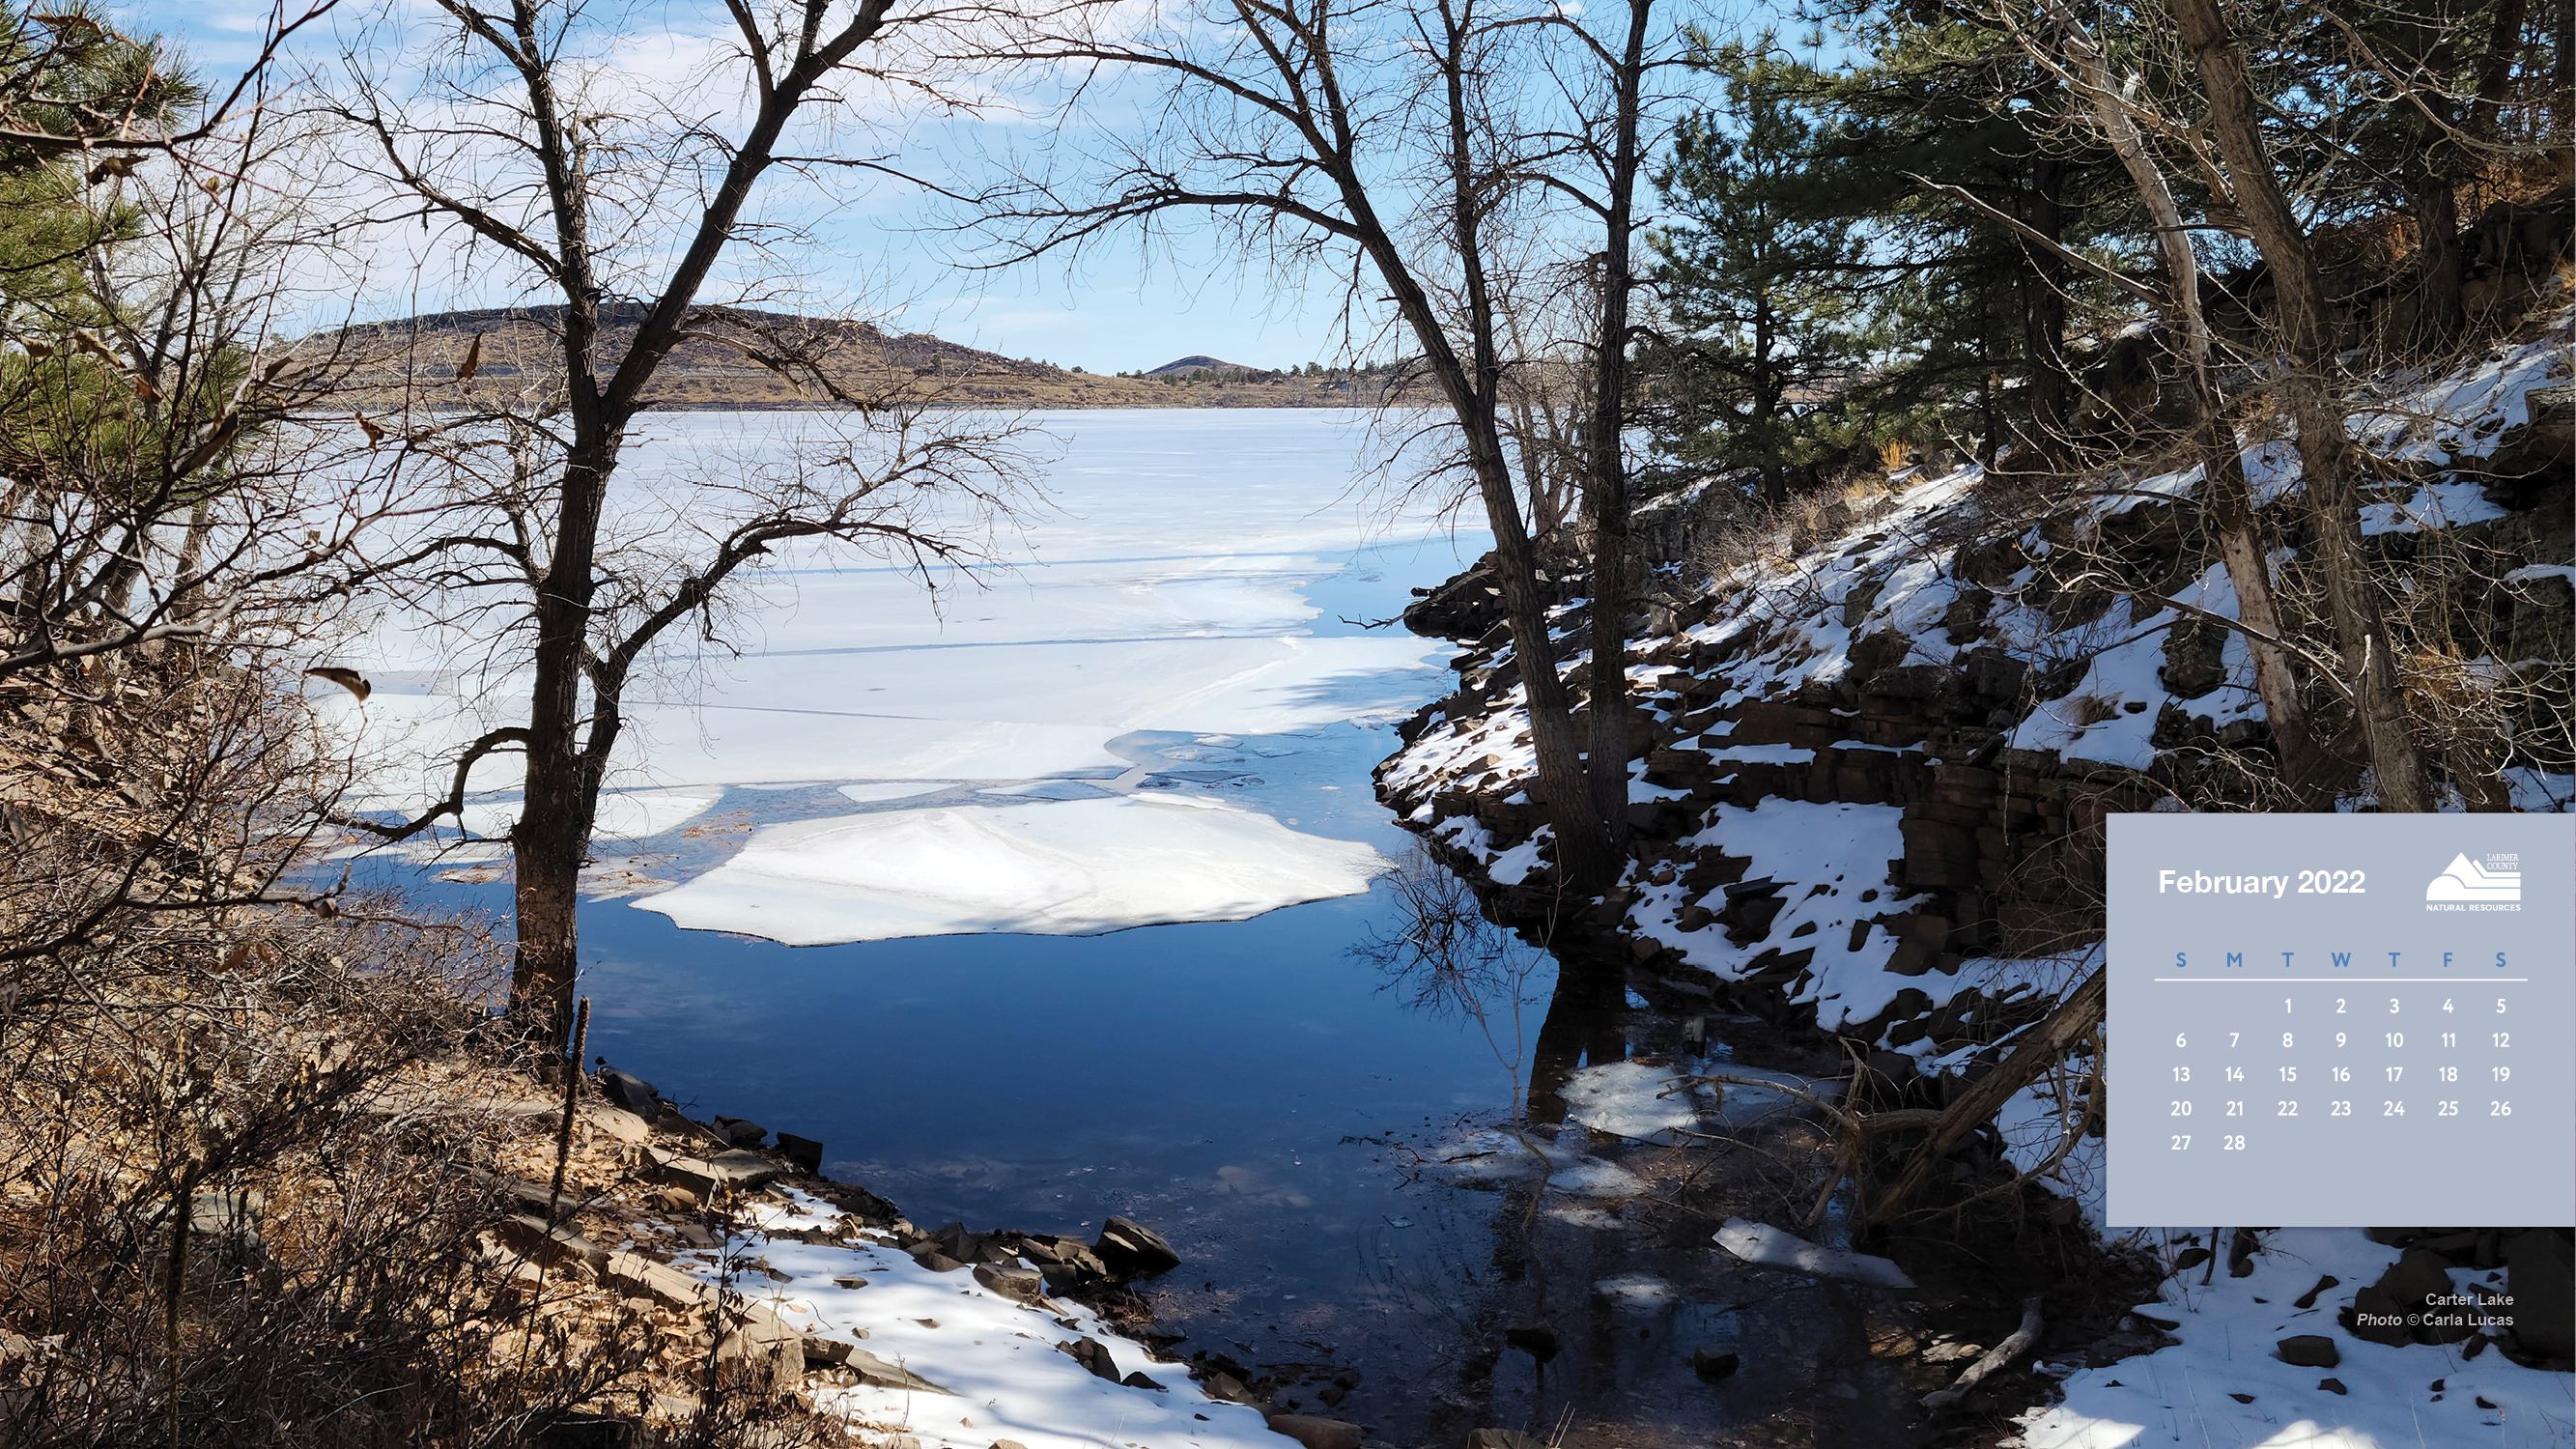 Image 2: Carter Lake; February 2022; Carla Lucas